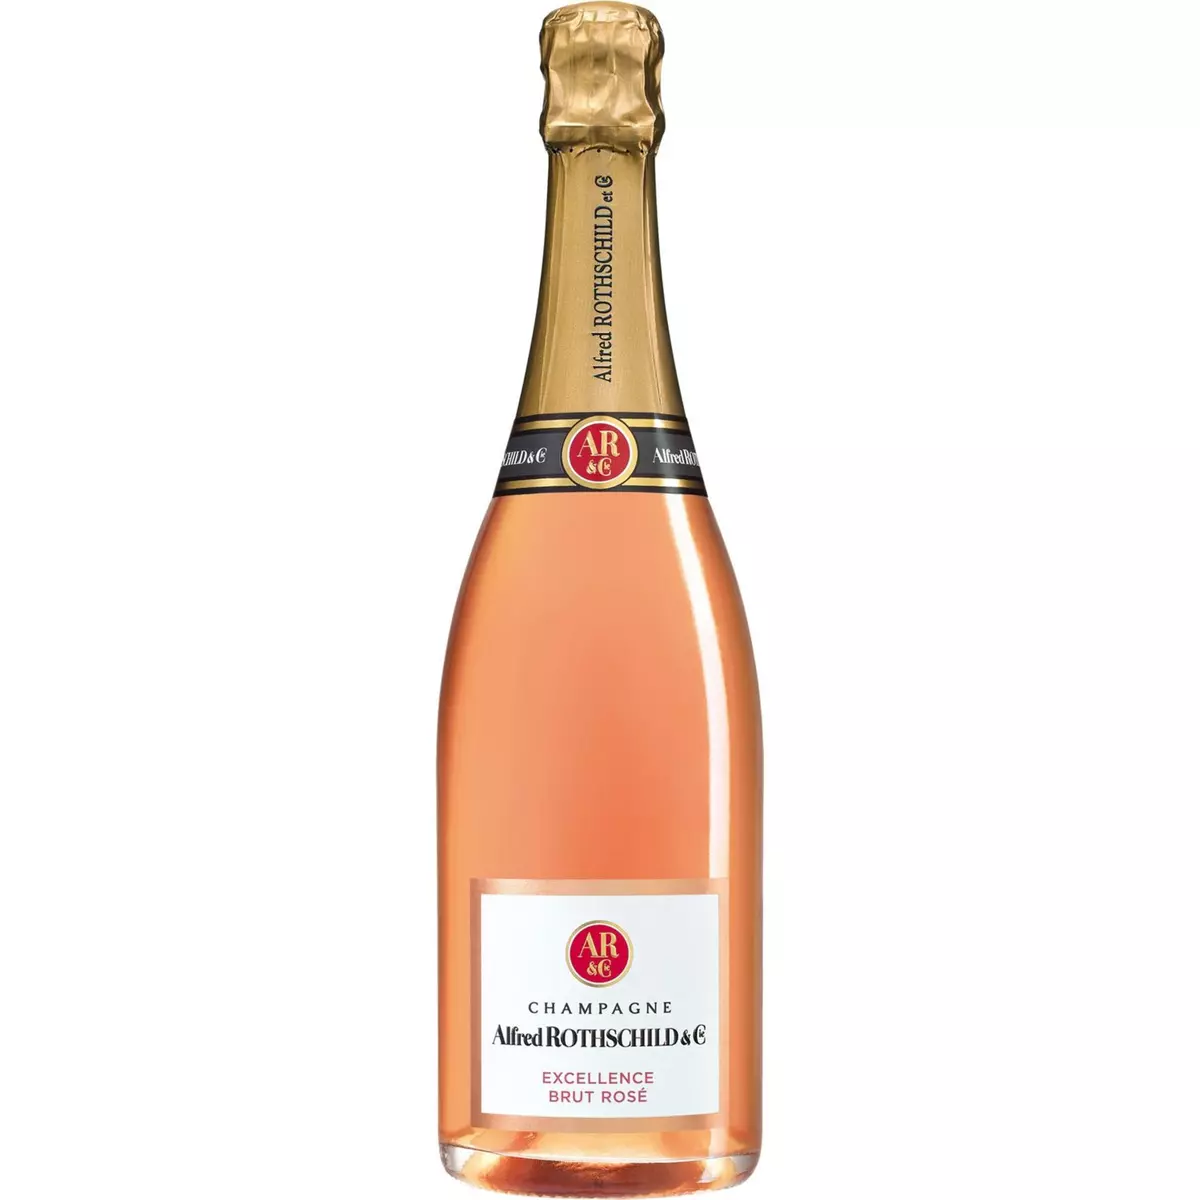 ALFRED ROTHSCHILD & CIE AOP Champagne Brut rosé 75cl